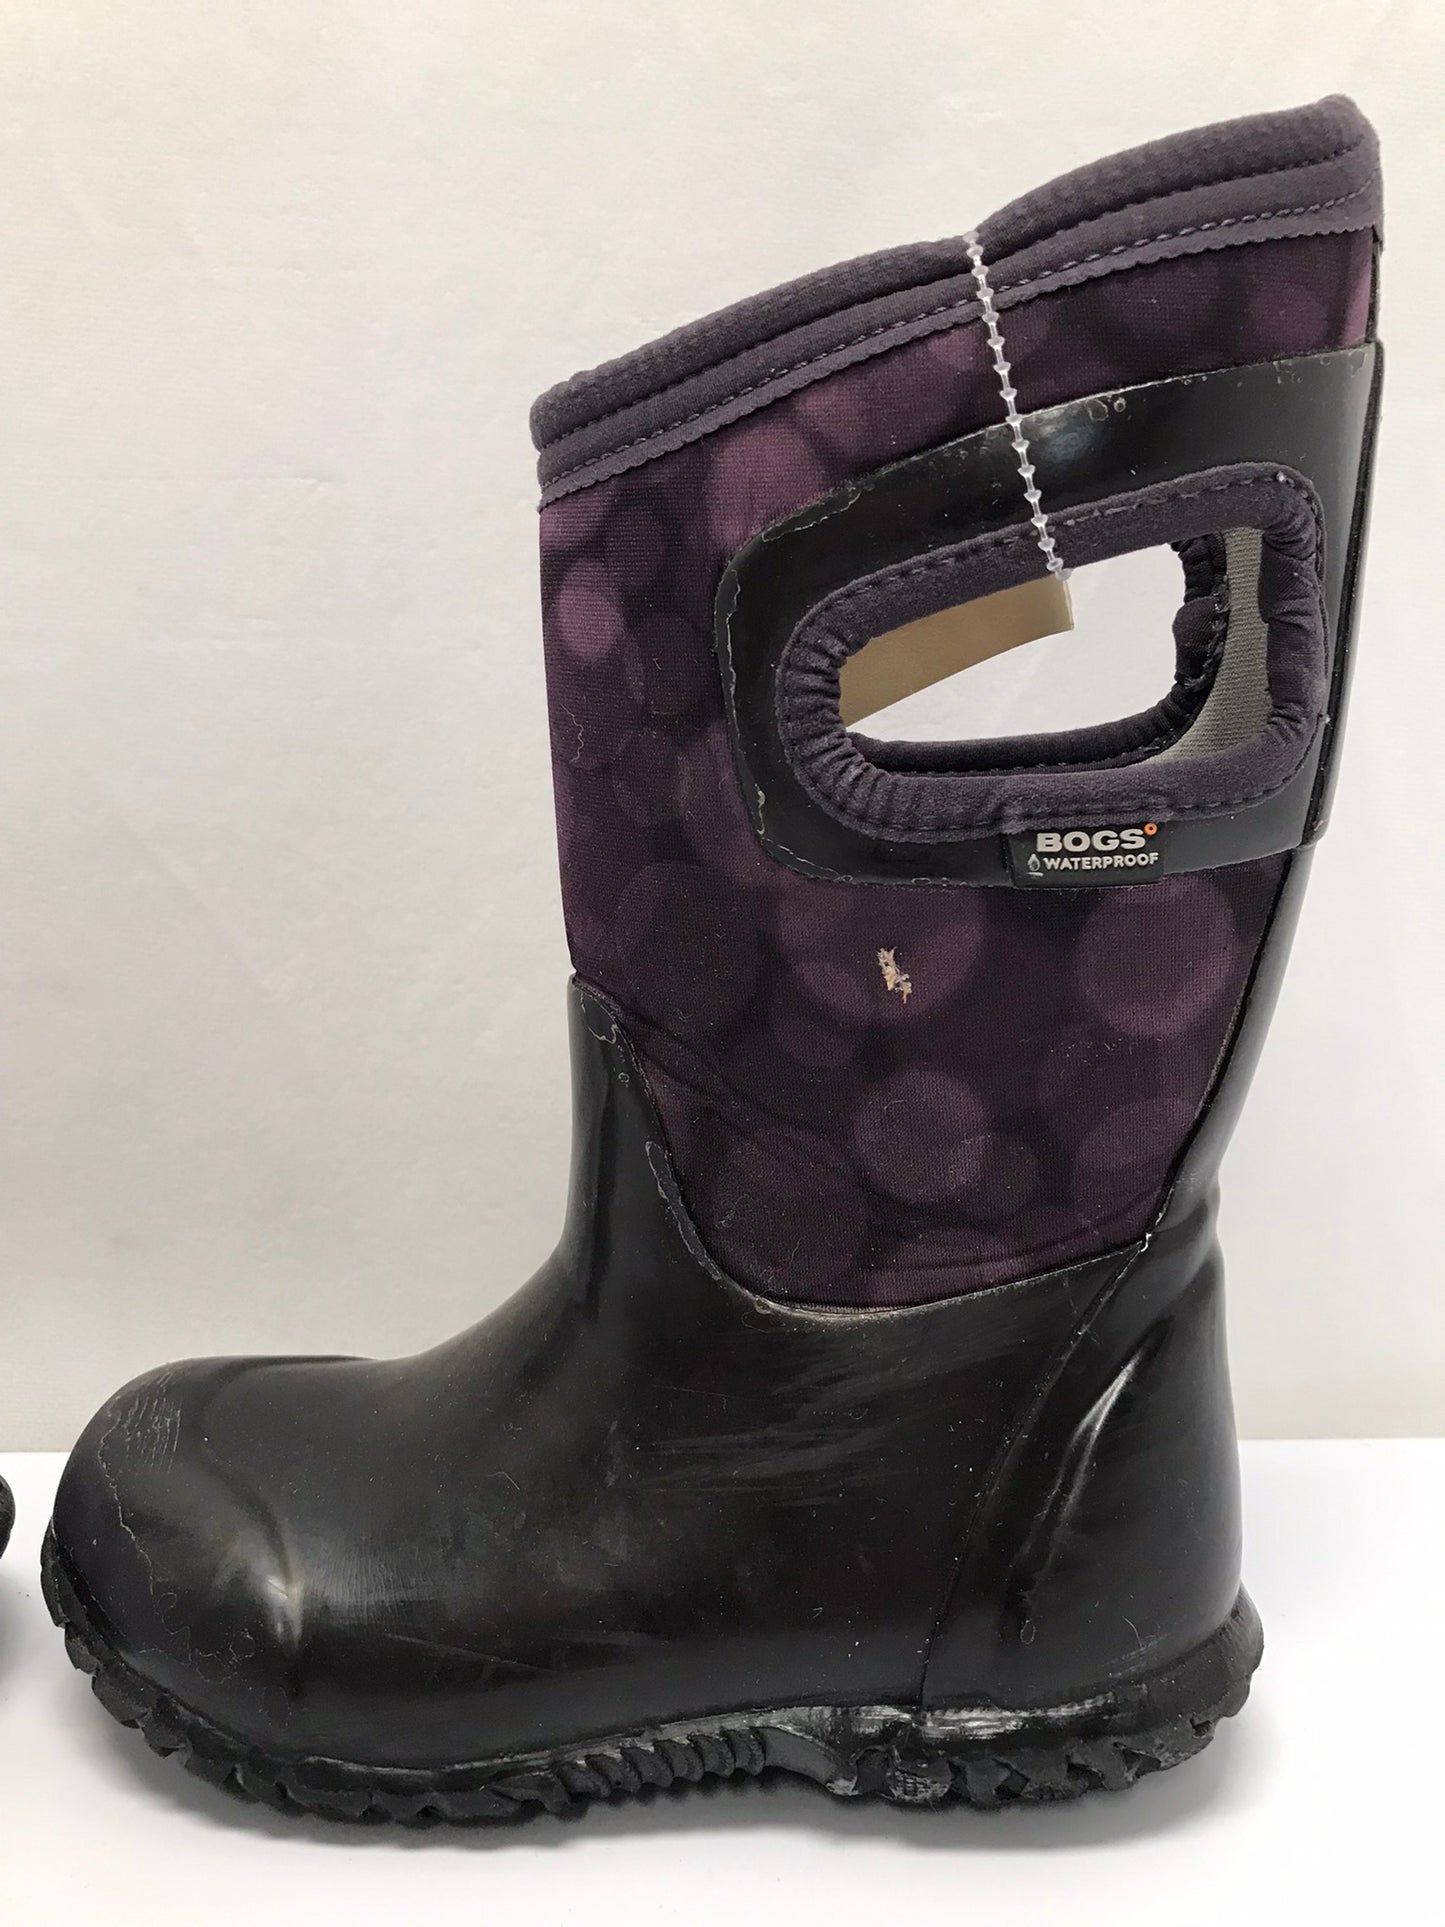 Rain Boots Bogs Brand Toddler Size 9 -15 degree Minor Wear Purple Black